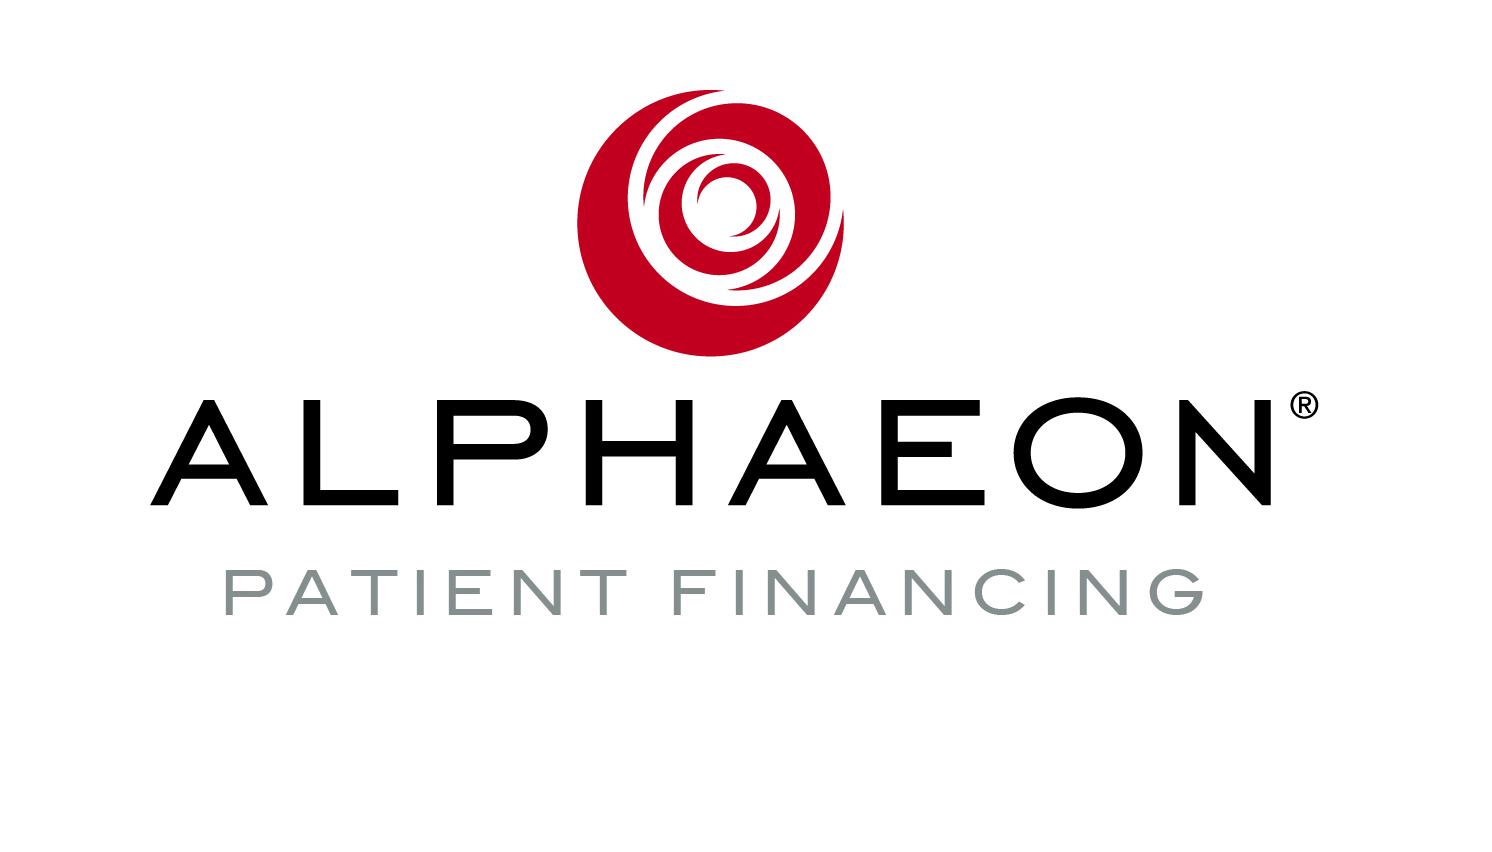 Alphaeon Patient Financing logo